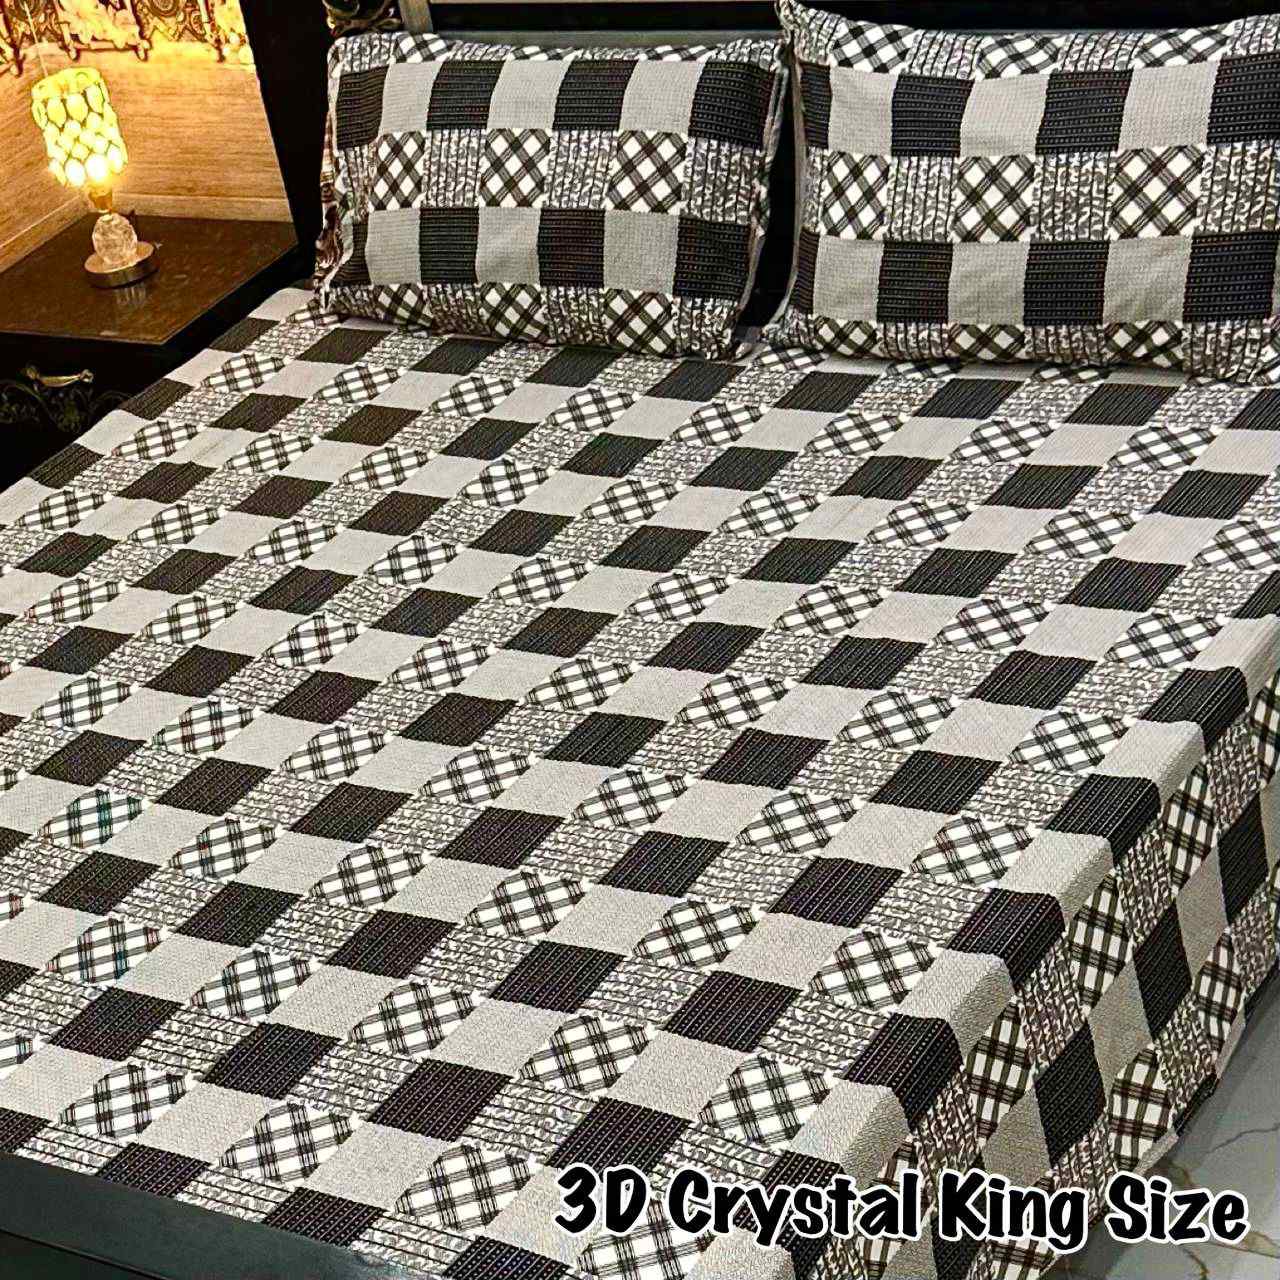 DF-CBSKS-3: DFY Bedding 3D Crystal Bed Sheet King Size